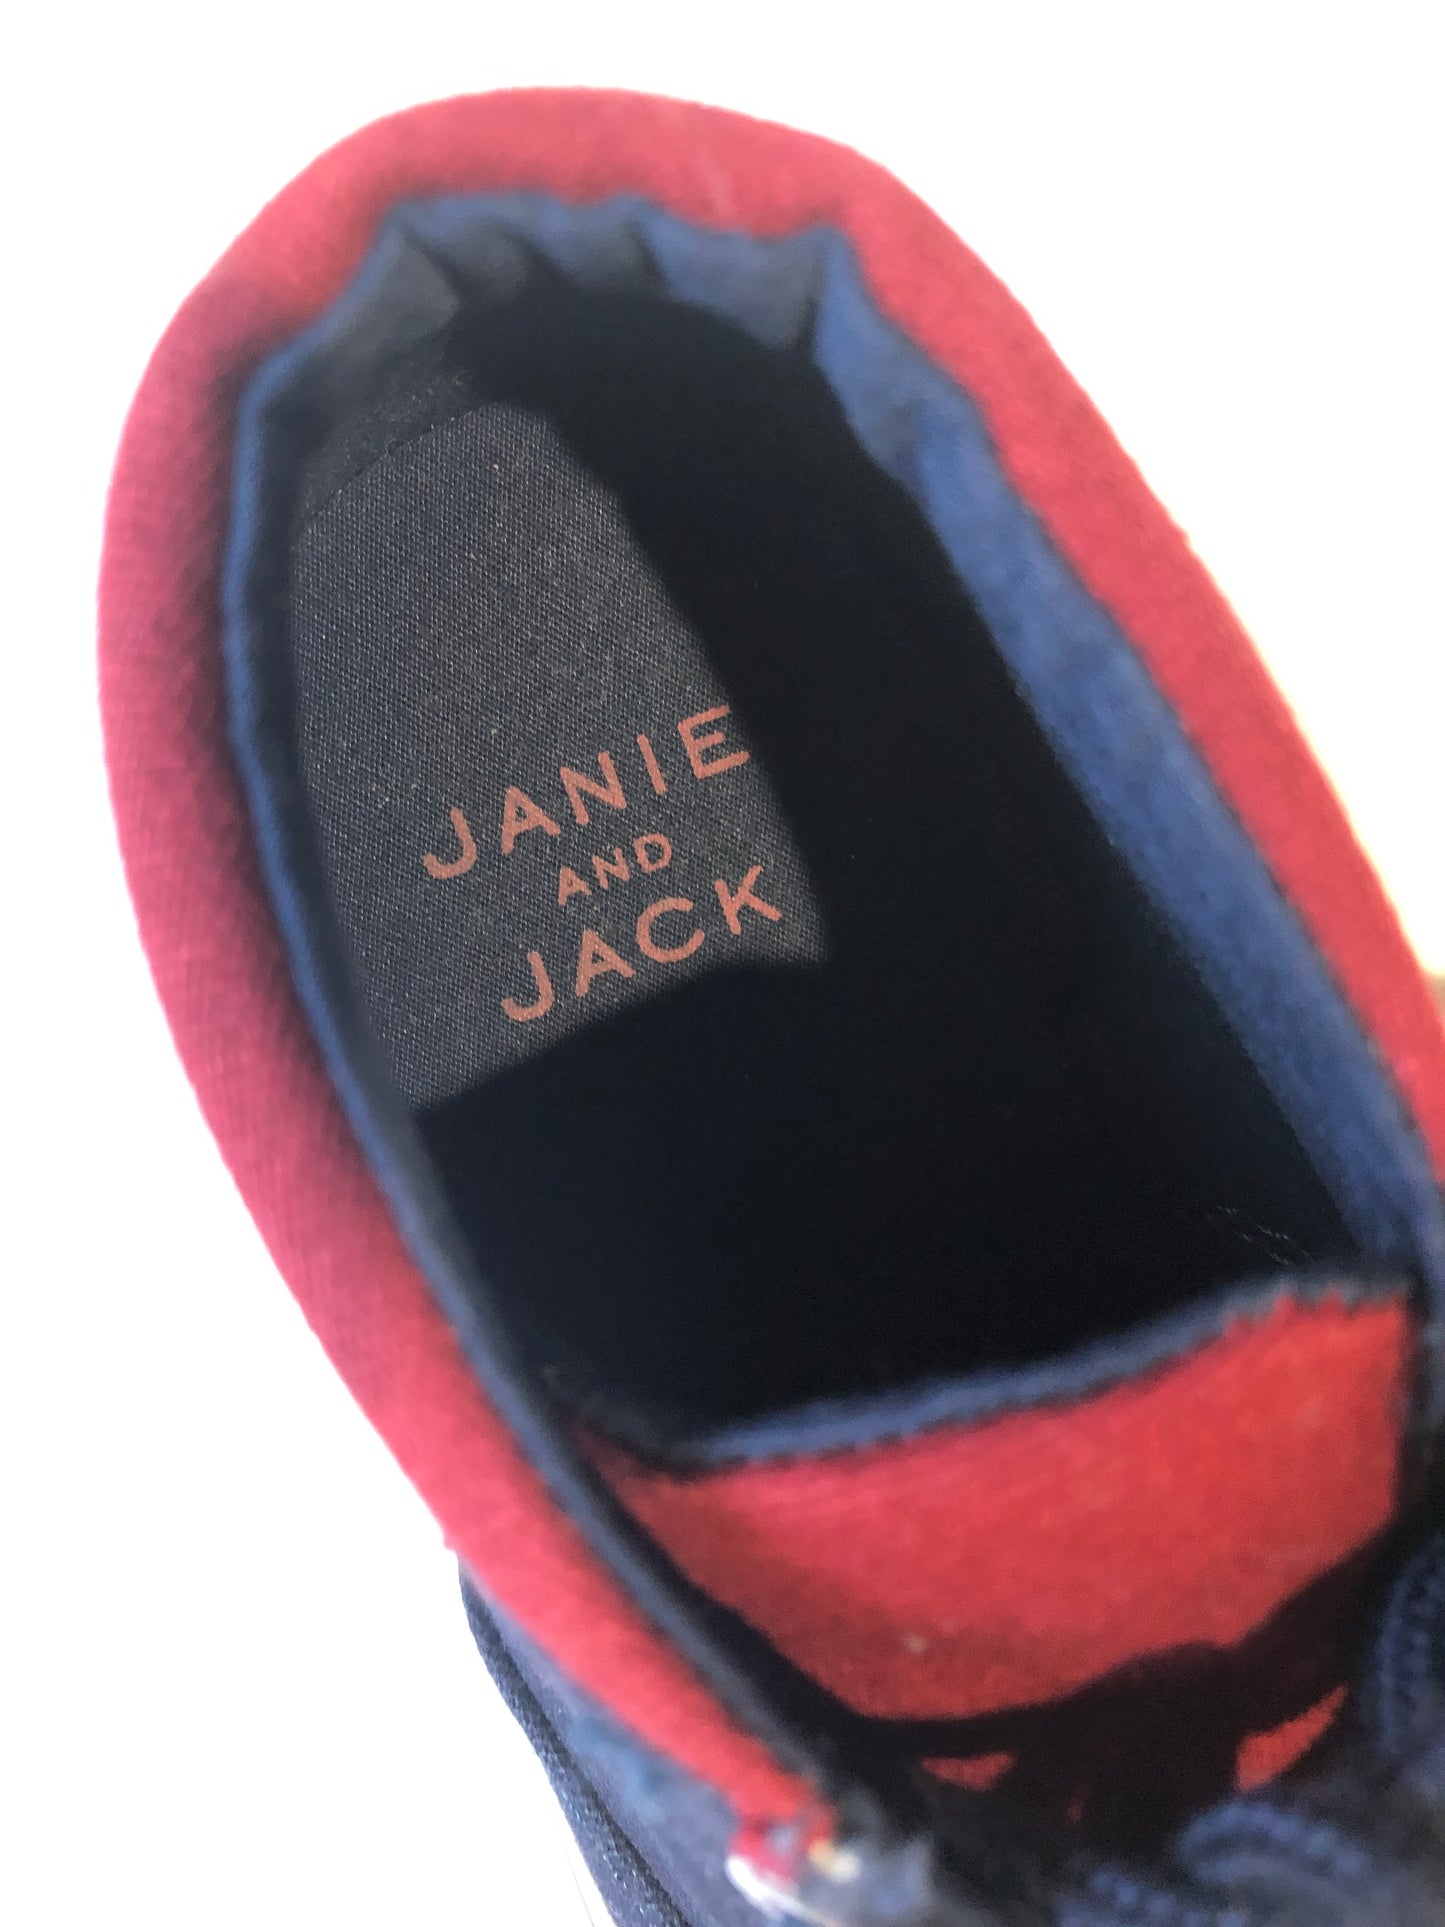 Size 9 boys janie jack navy blue shoes. Worn once. Like new